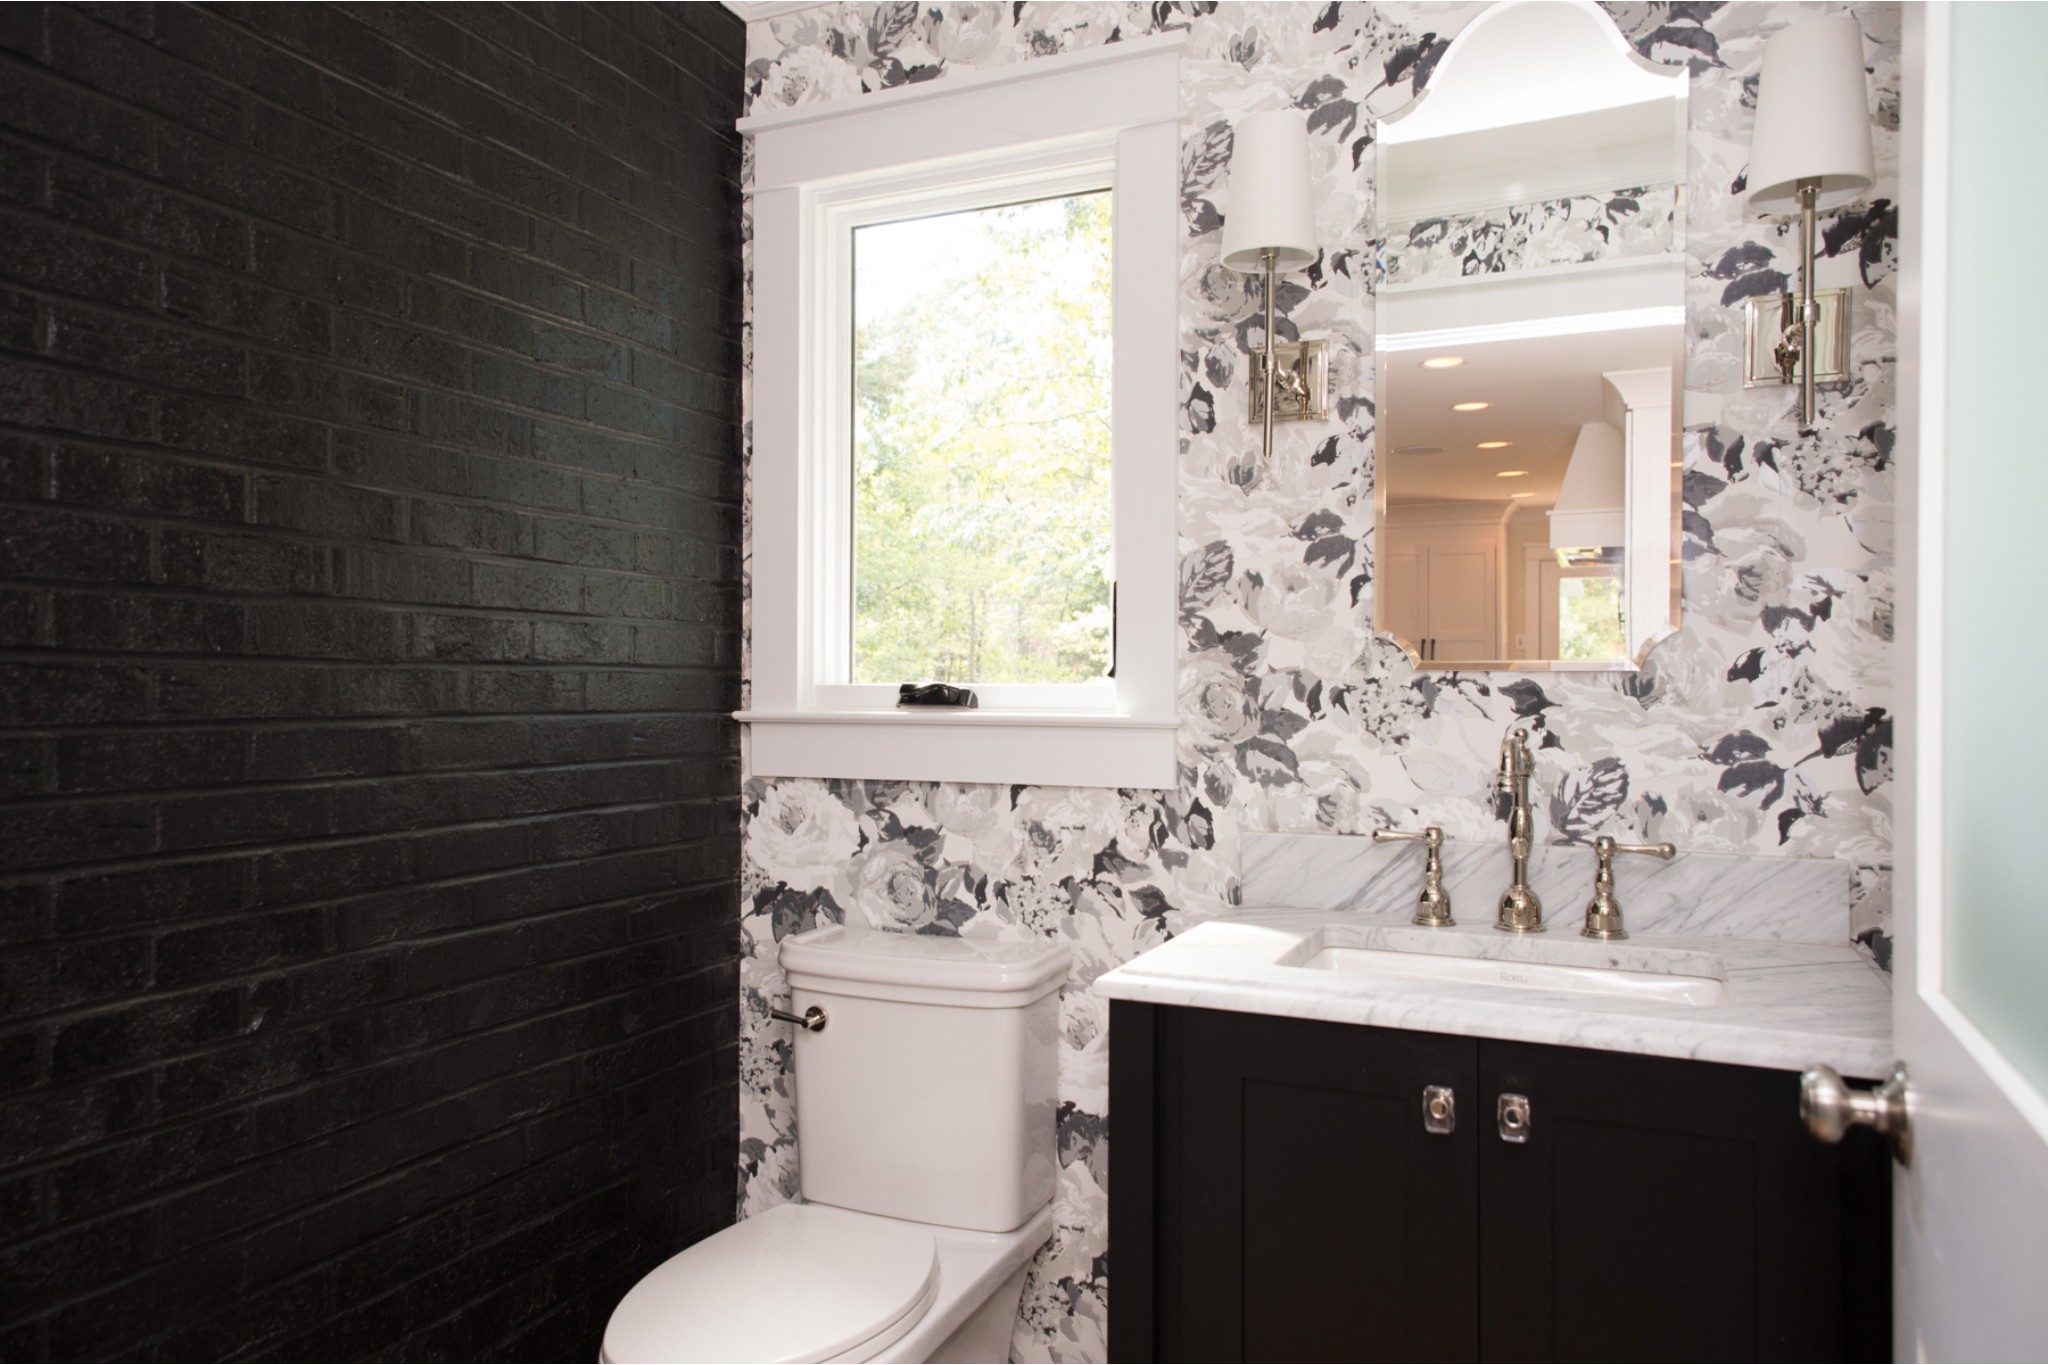 bathroom removal black brick wall beside white, grey and black flower wallpaper behind toilet